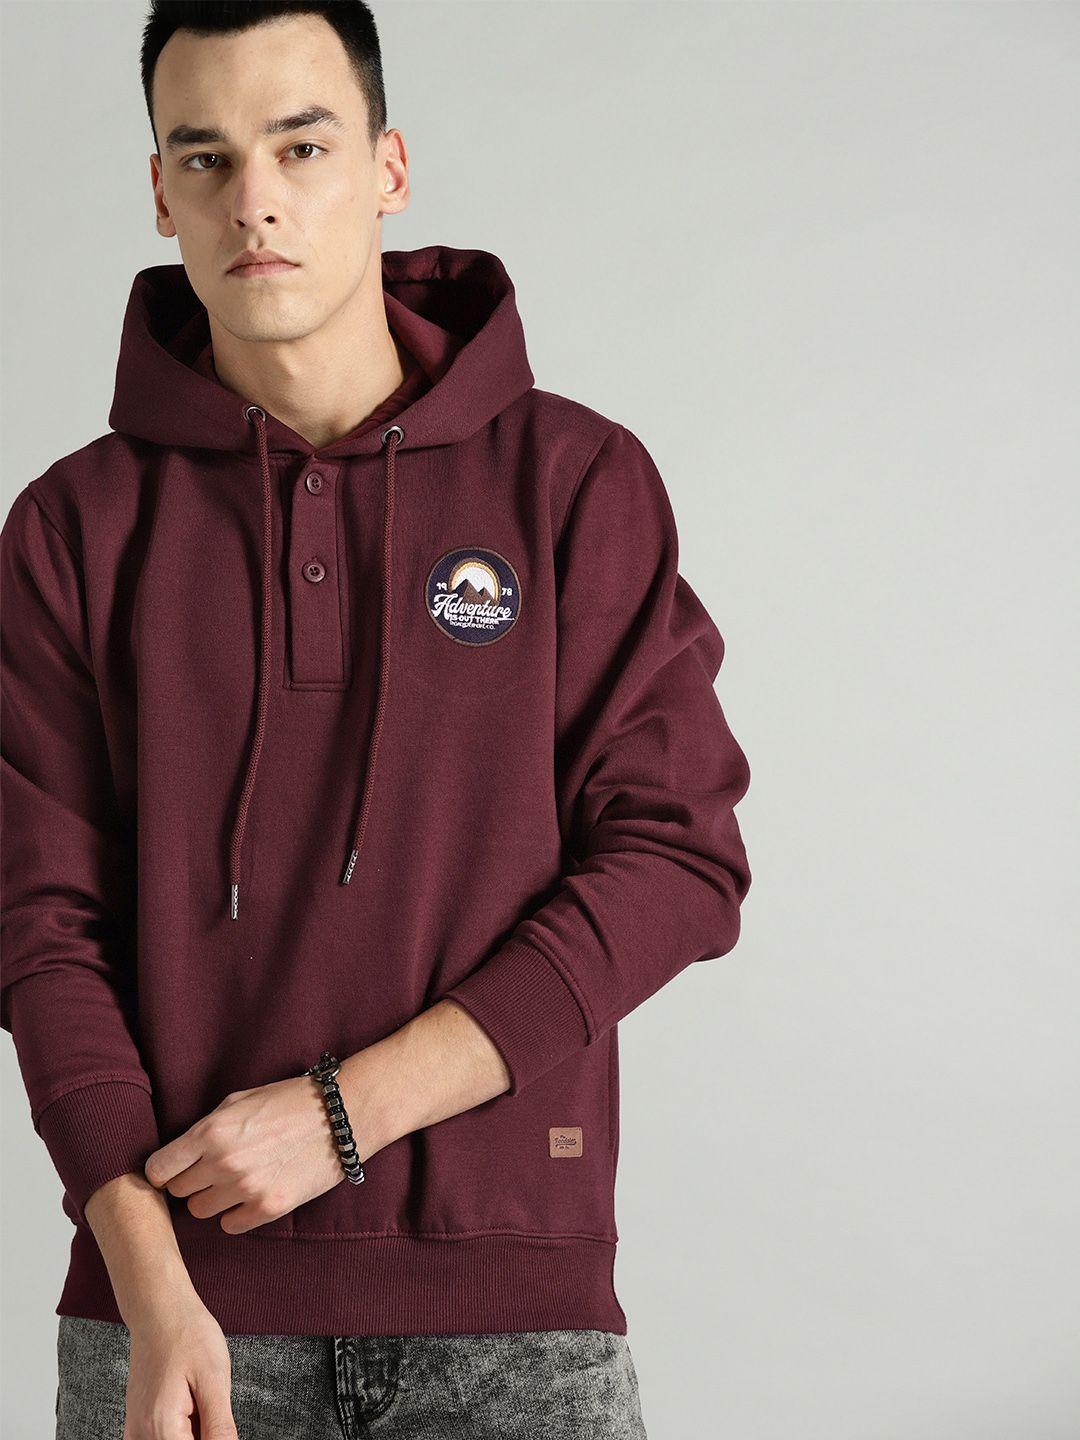 the roadster lifestyle co men burgundy solid hooded sweatshirt